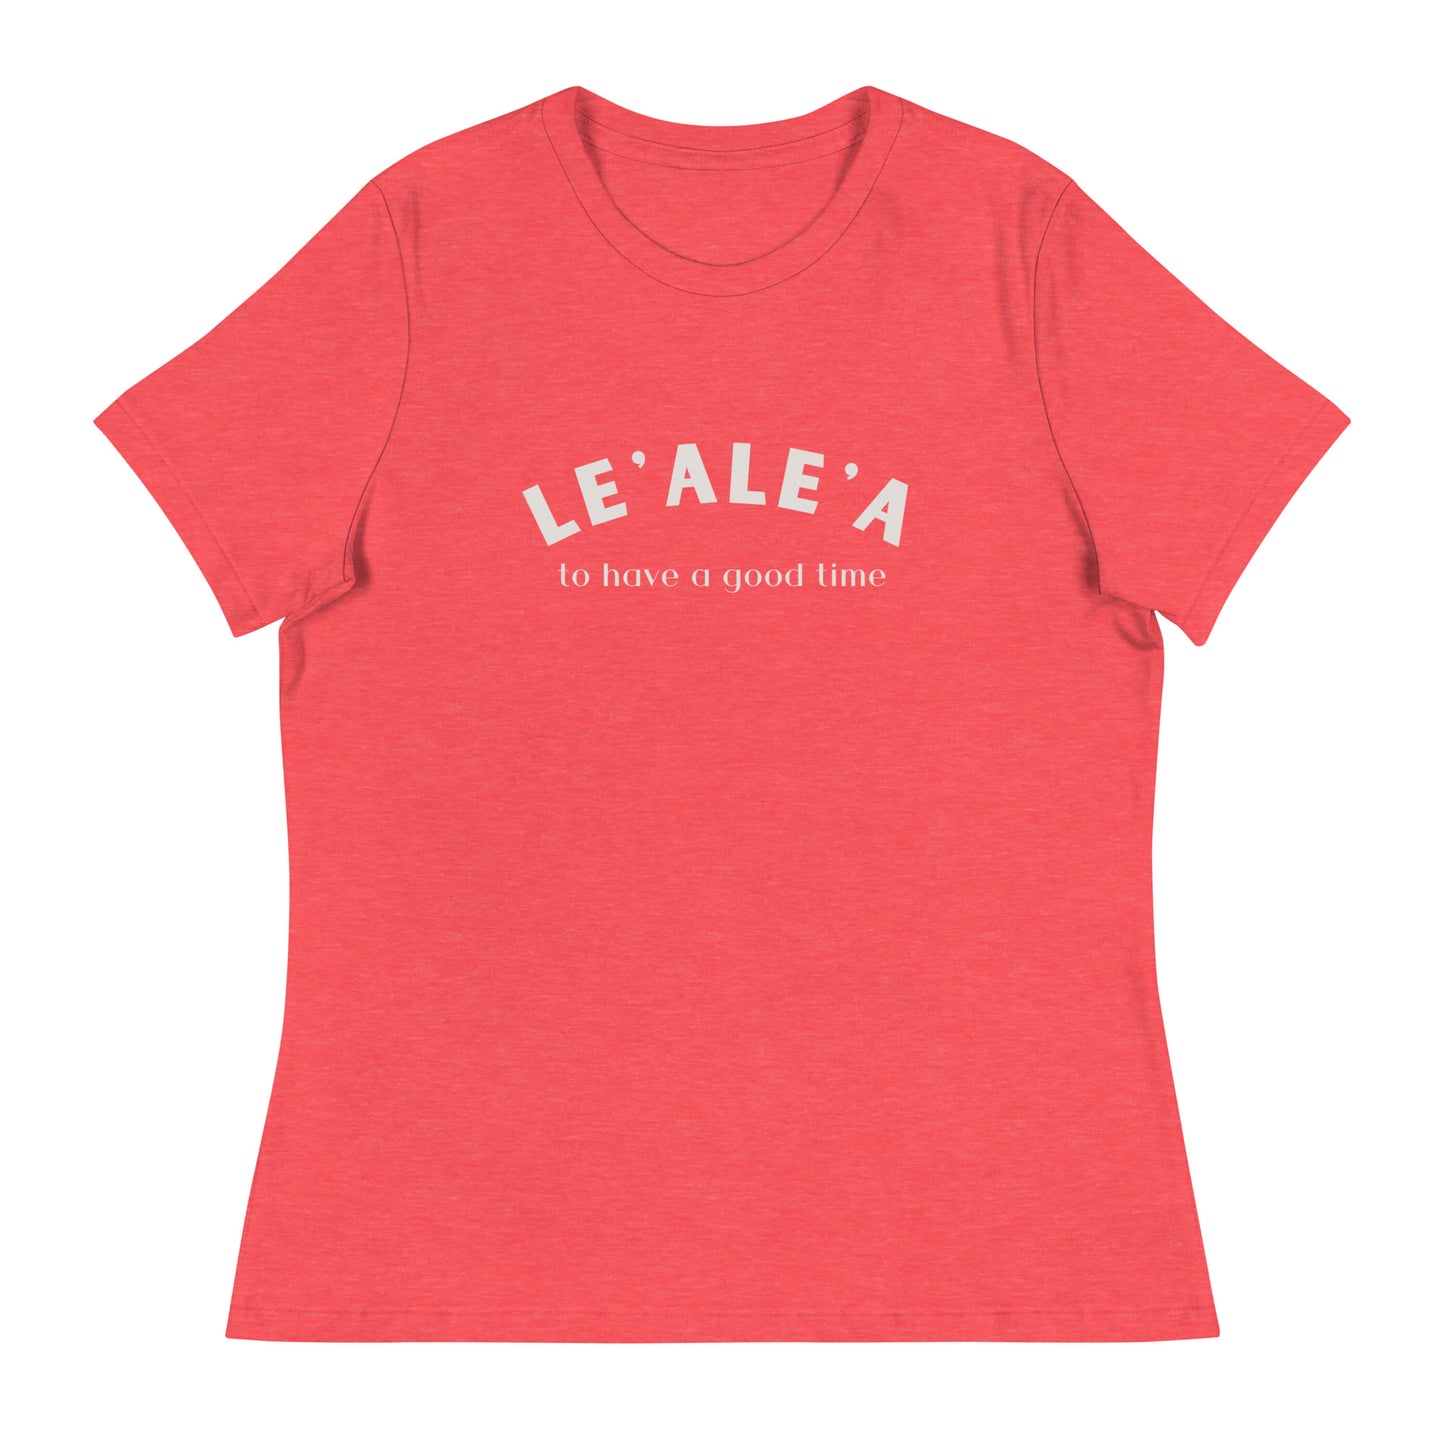 Le'ale'a short sleeve t-shirt